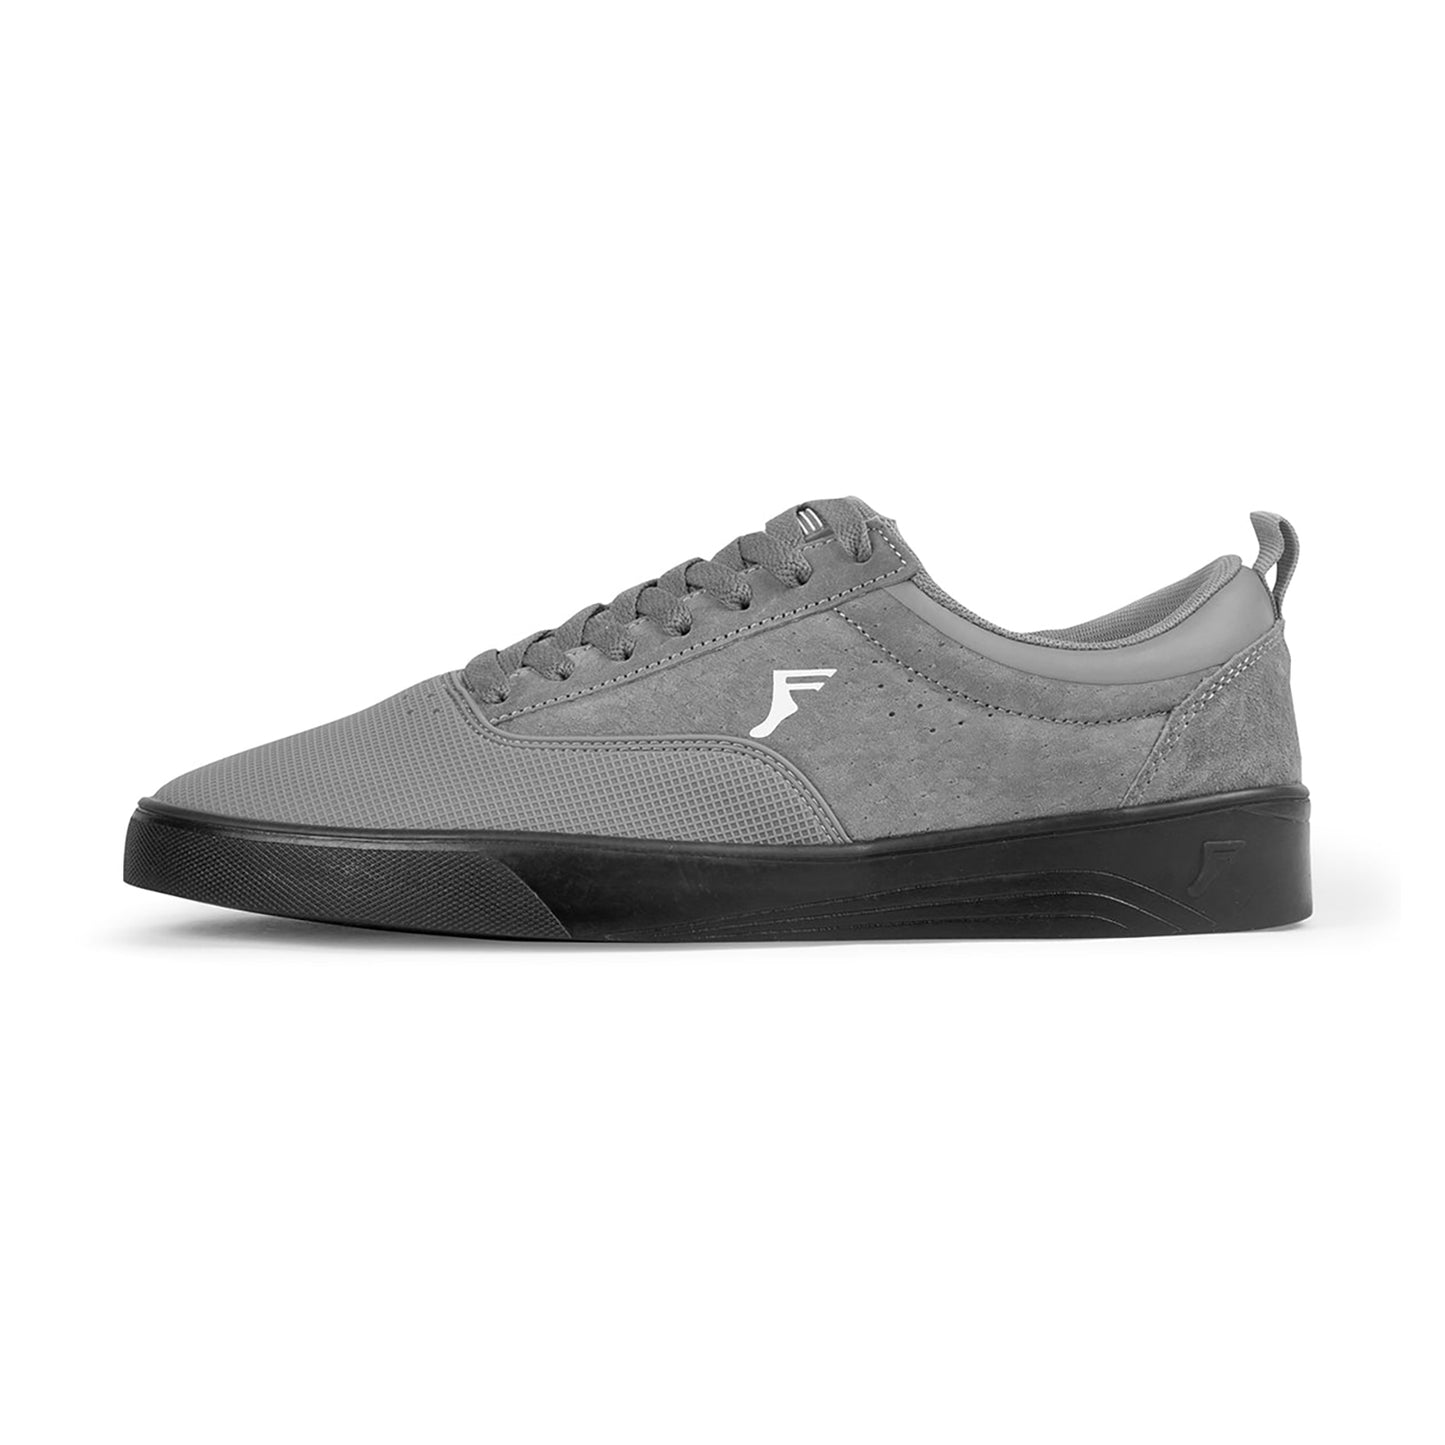 Grey fp footwear intercept shoes with black sole